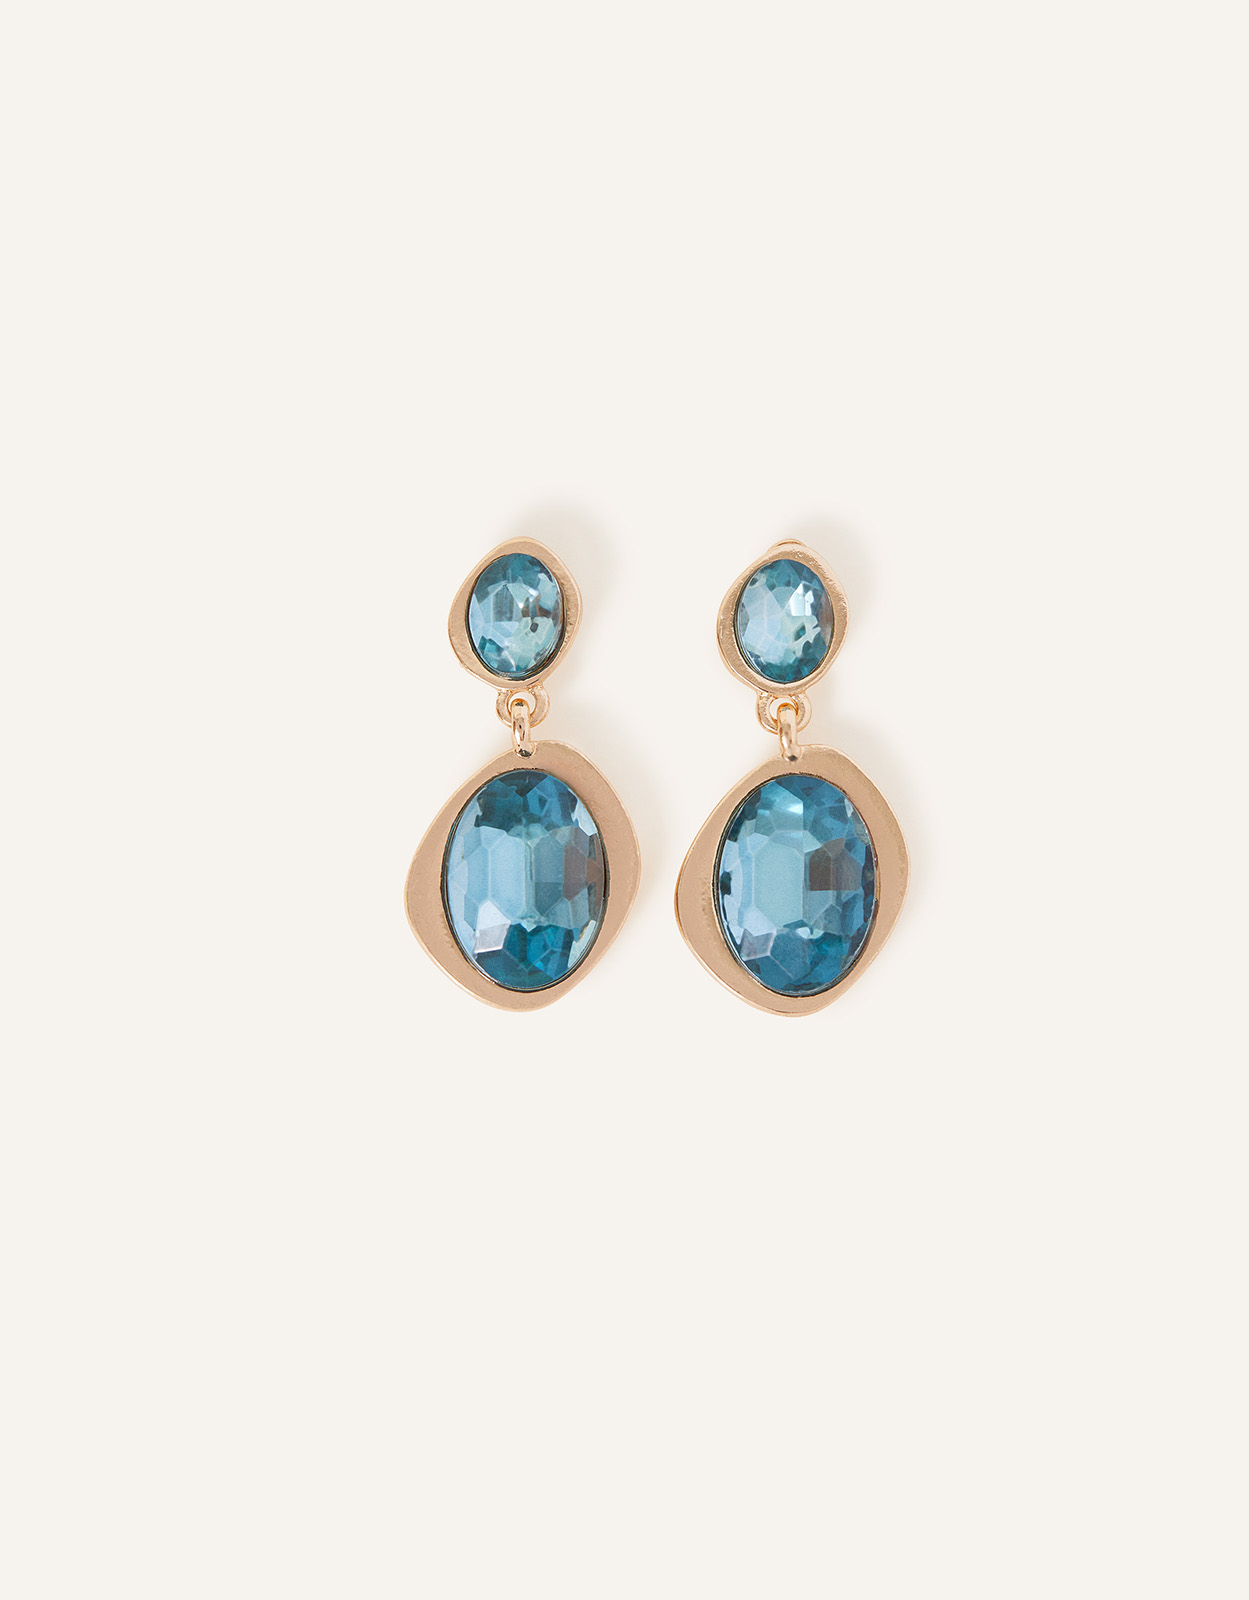 Accessorize Women's Gold and Blue Irregular Gem Drop Earrings, Size: 4cm